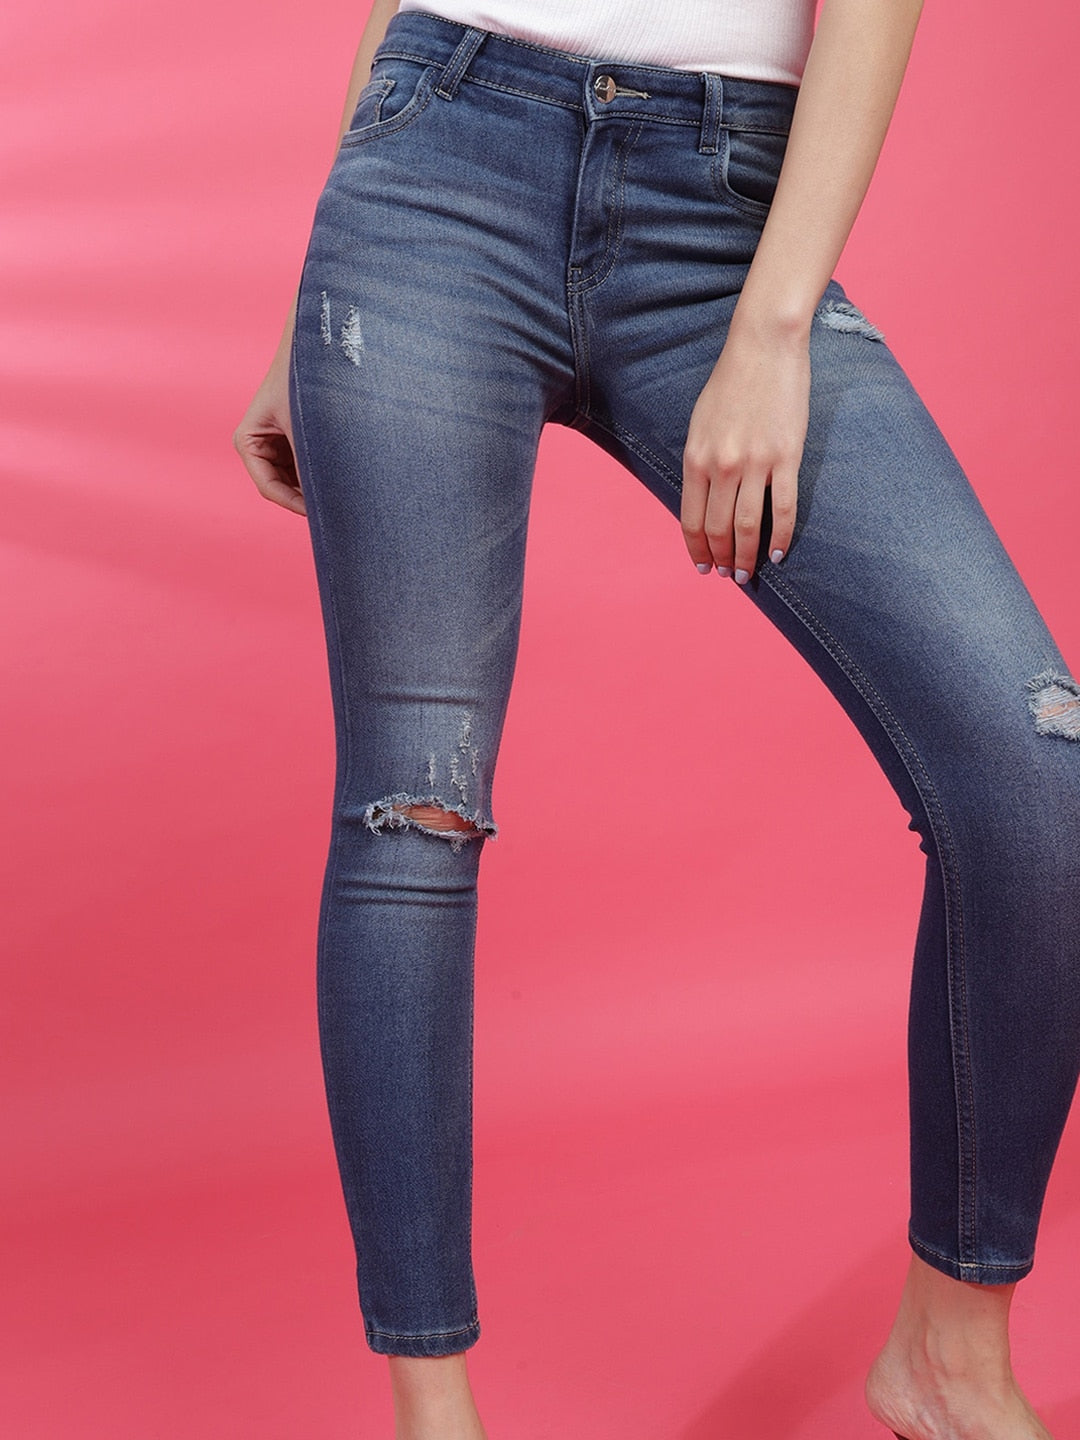 Shop Women Solid Jeans Online.